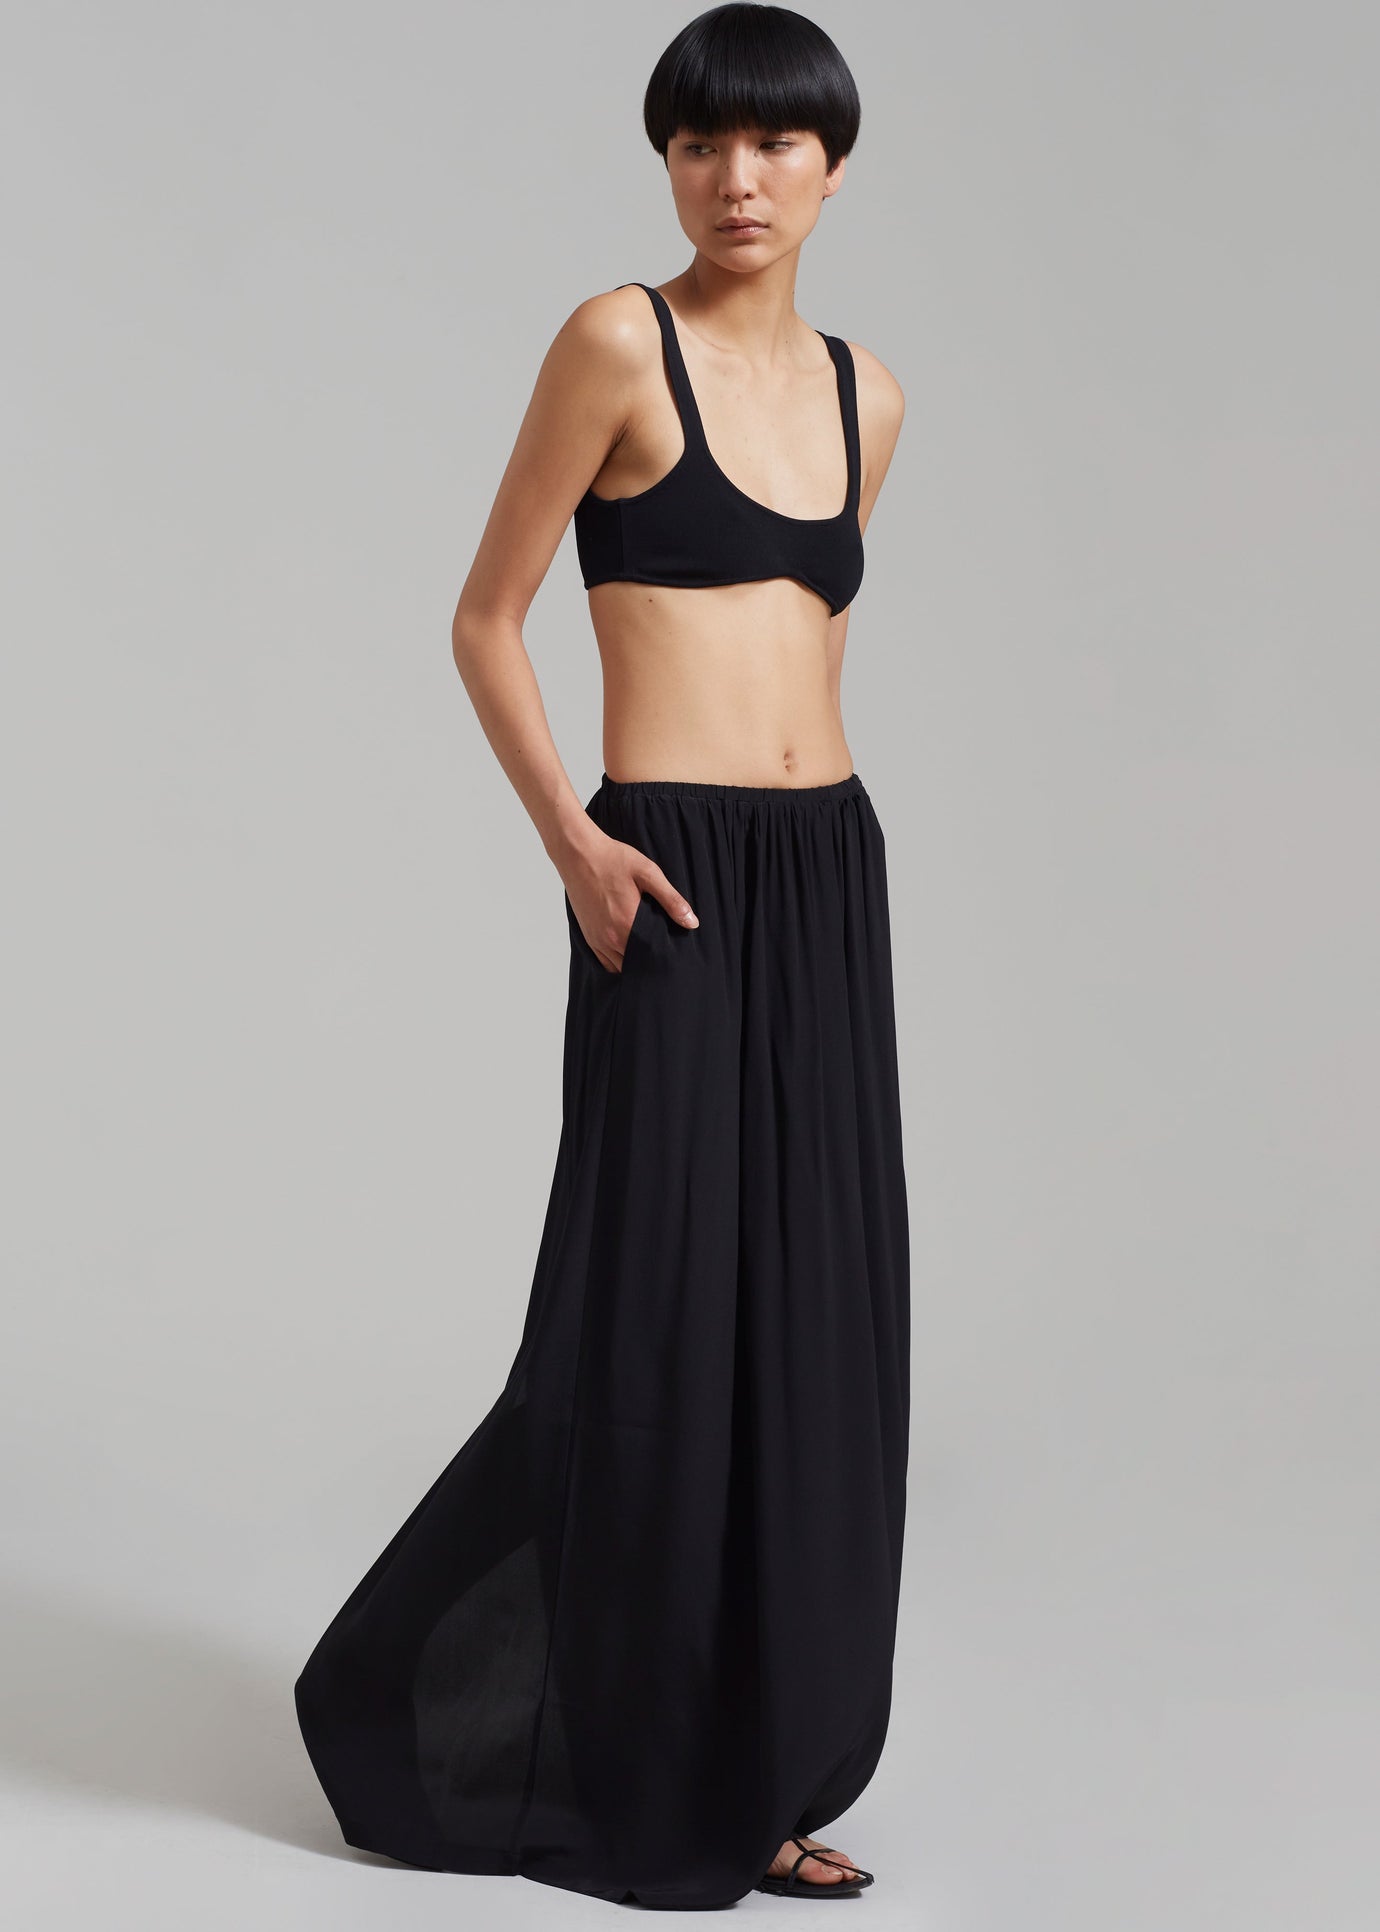 Beare Park Silk Elastic Waist Skirt - Black - 1